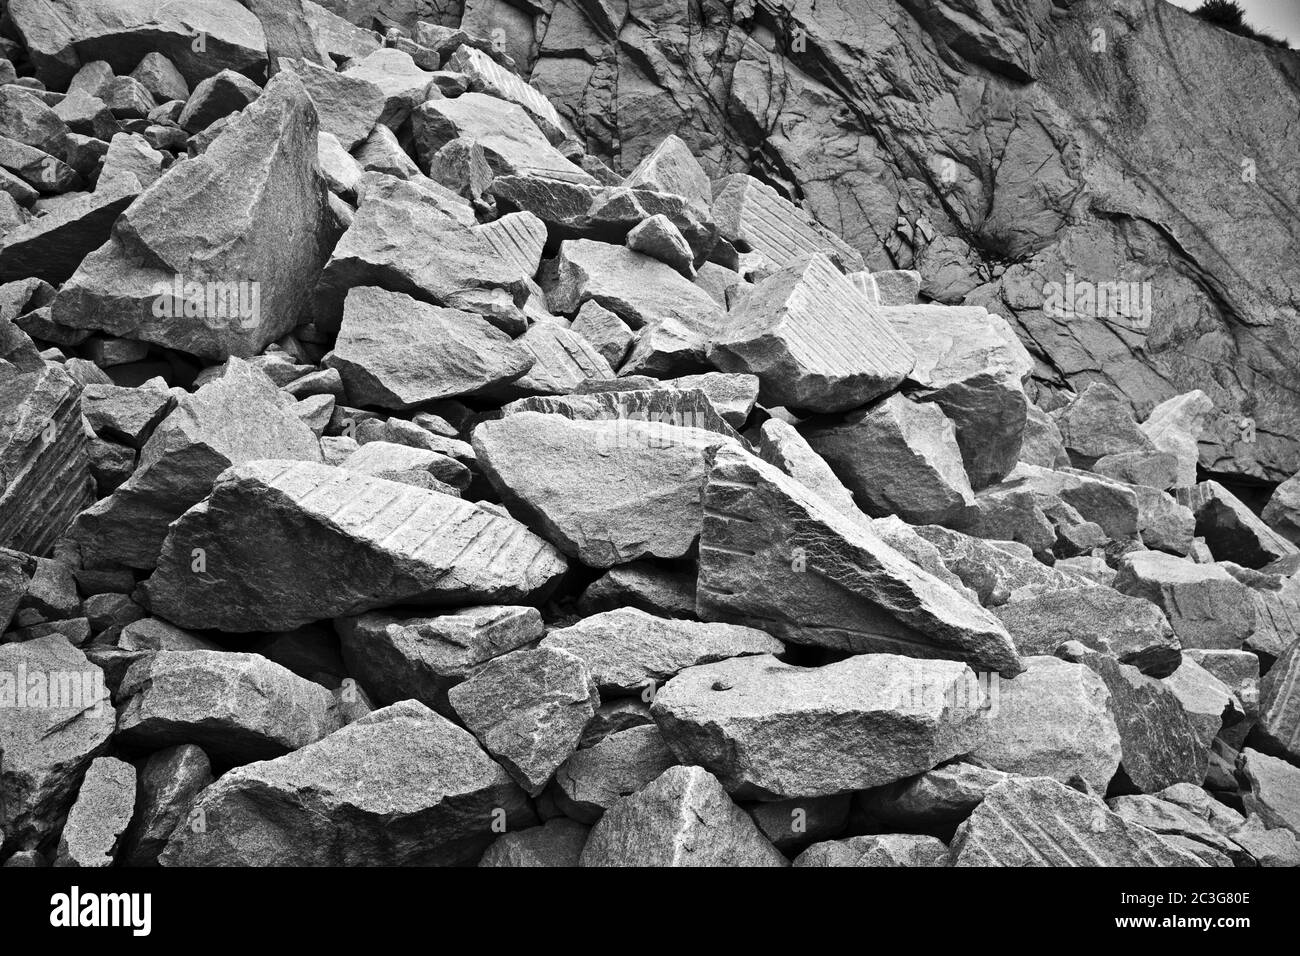 Grayscale shot of rock slide Stock Photo